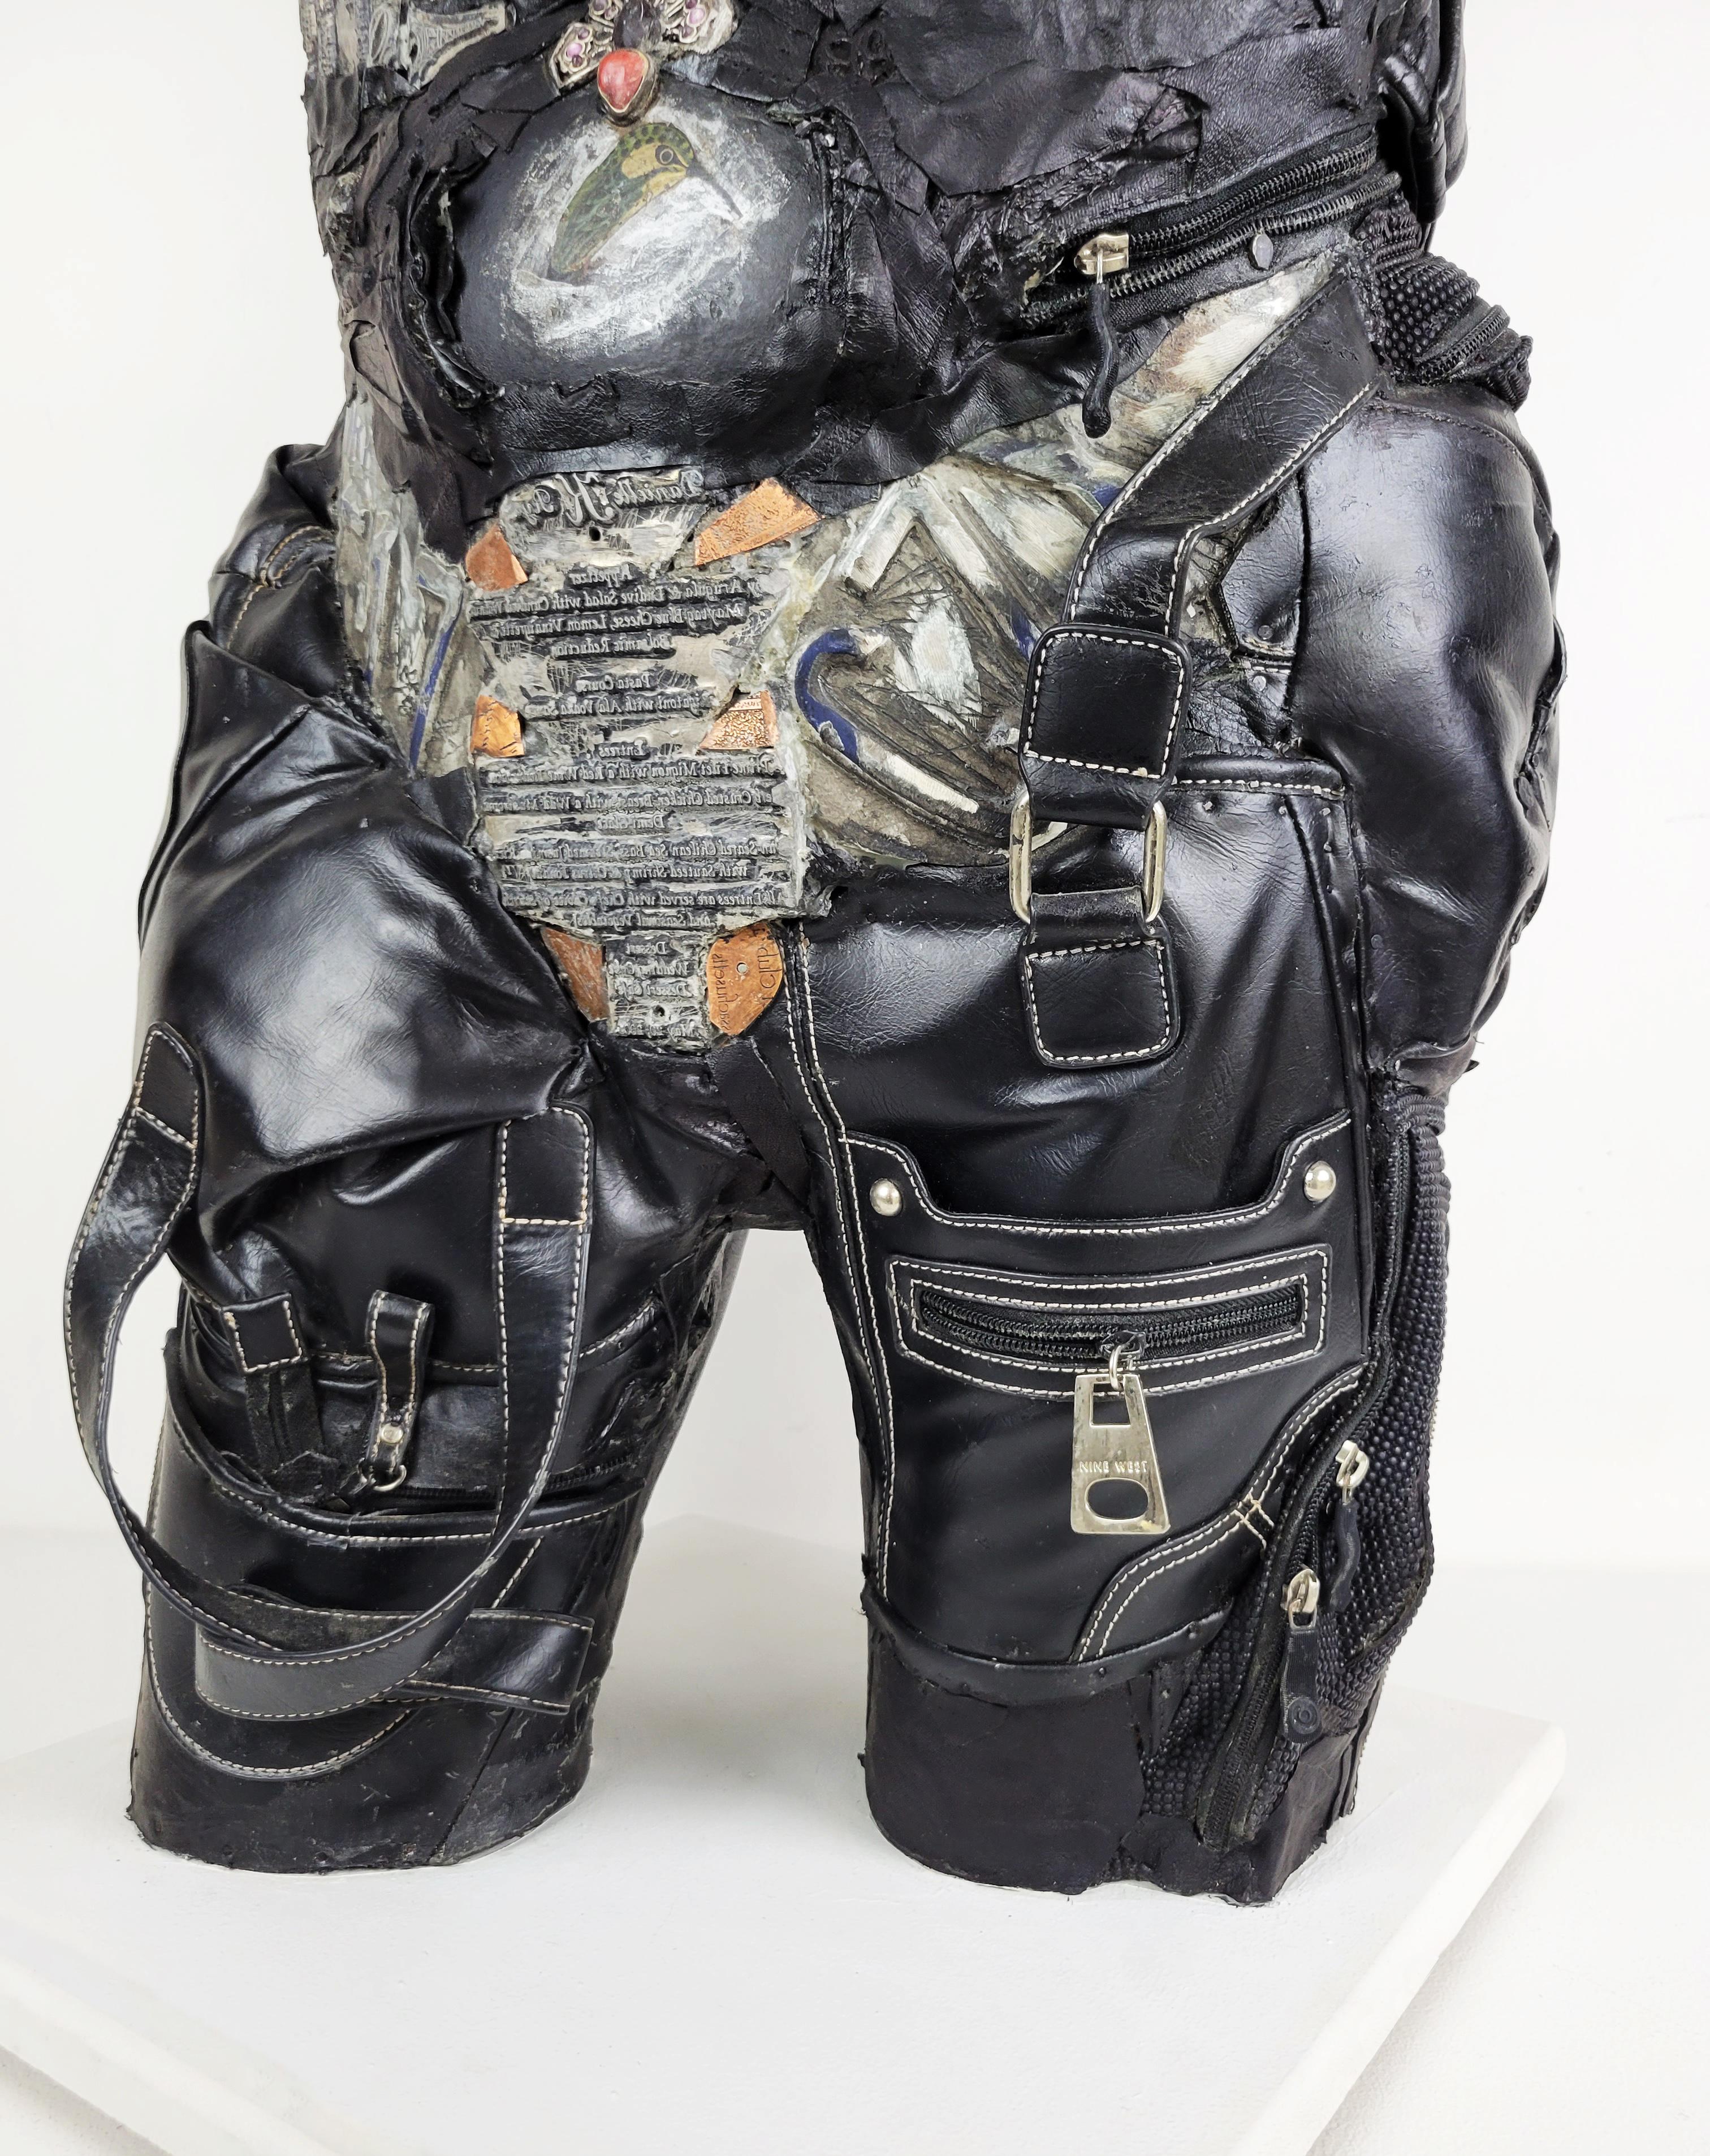 Feminist Contemporary Black/Silver Leather Metal Torso Sculpture- GenderBend 682 For Sale 5